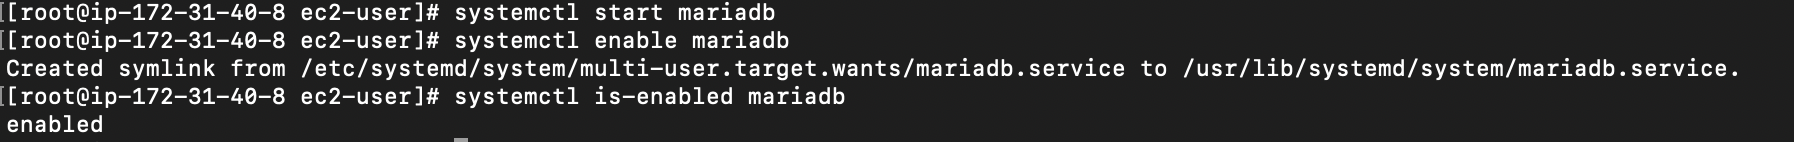 AmazonLinux2 MariaDB install